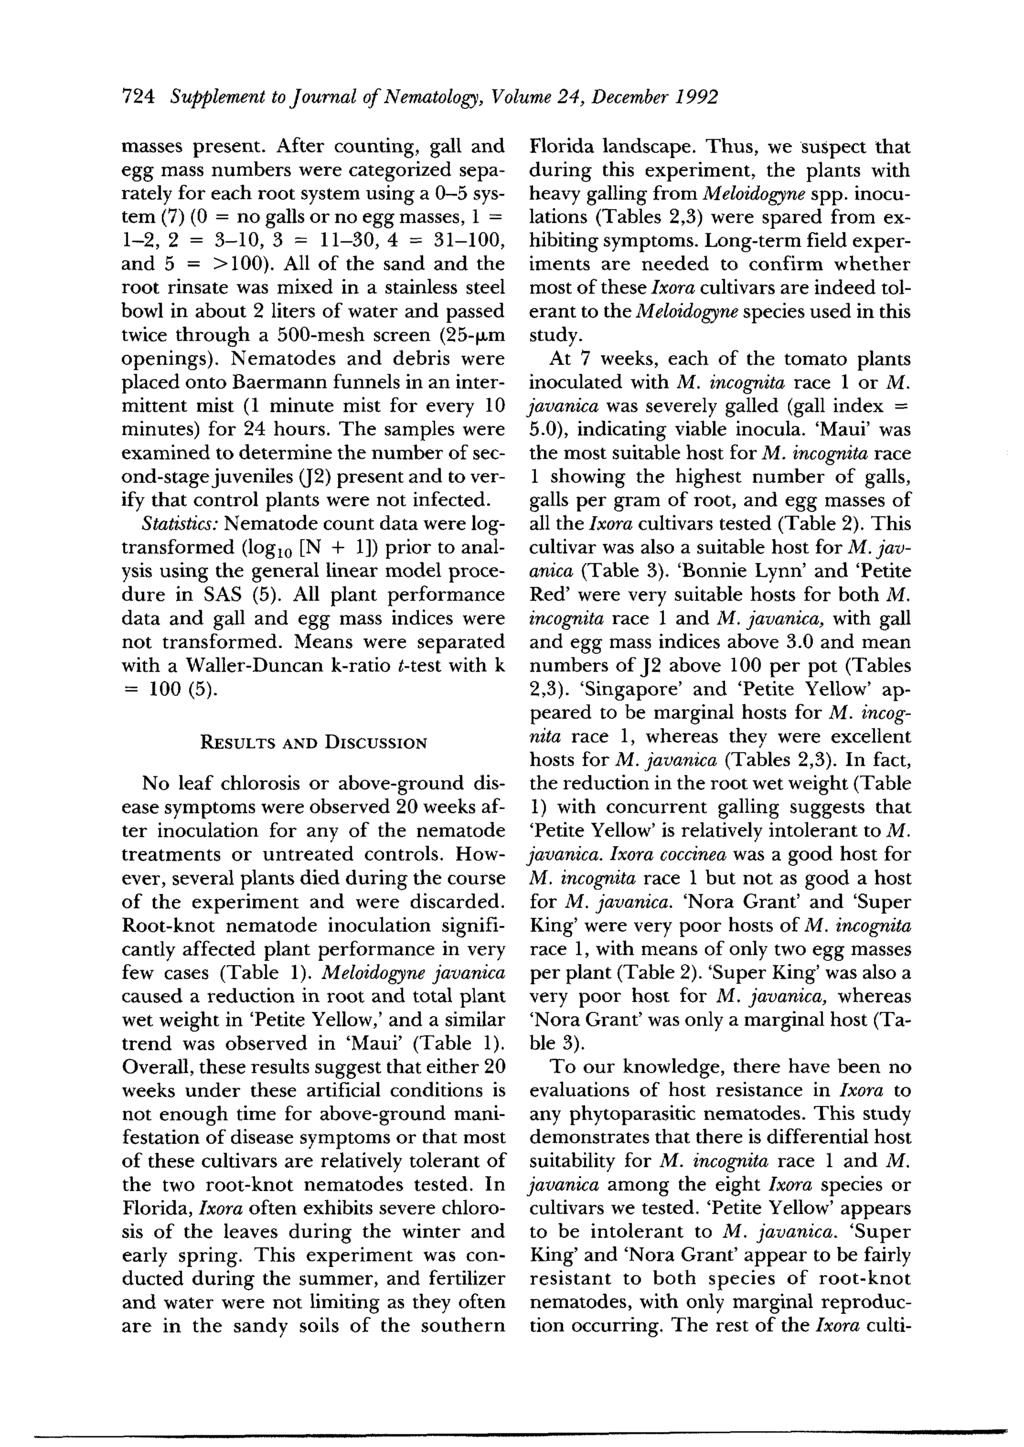 724 Supplement to Journal of Nematology, Volume 24, December 1992 masses present.